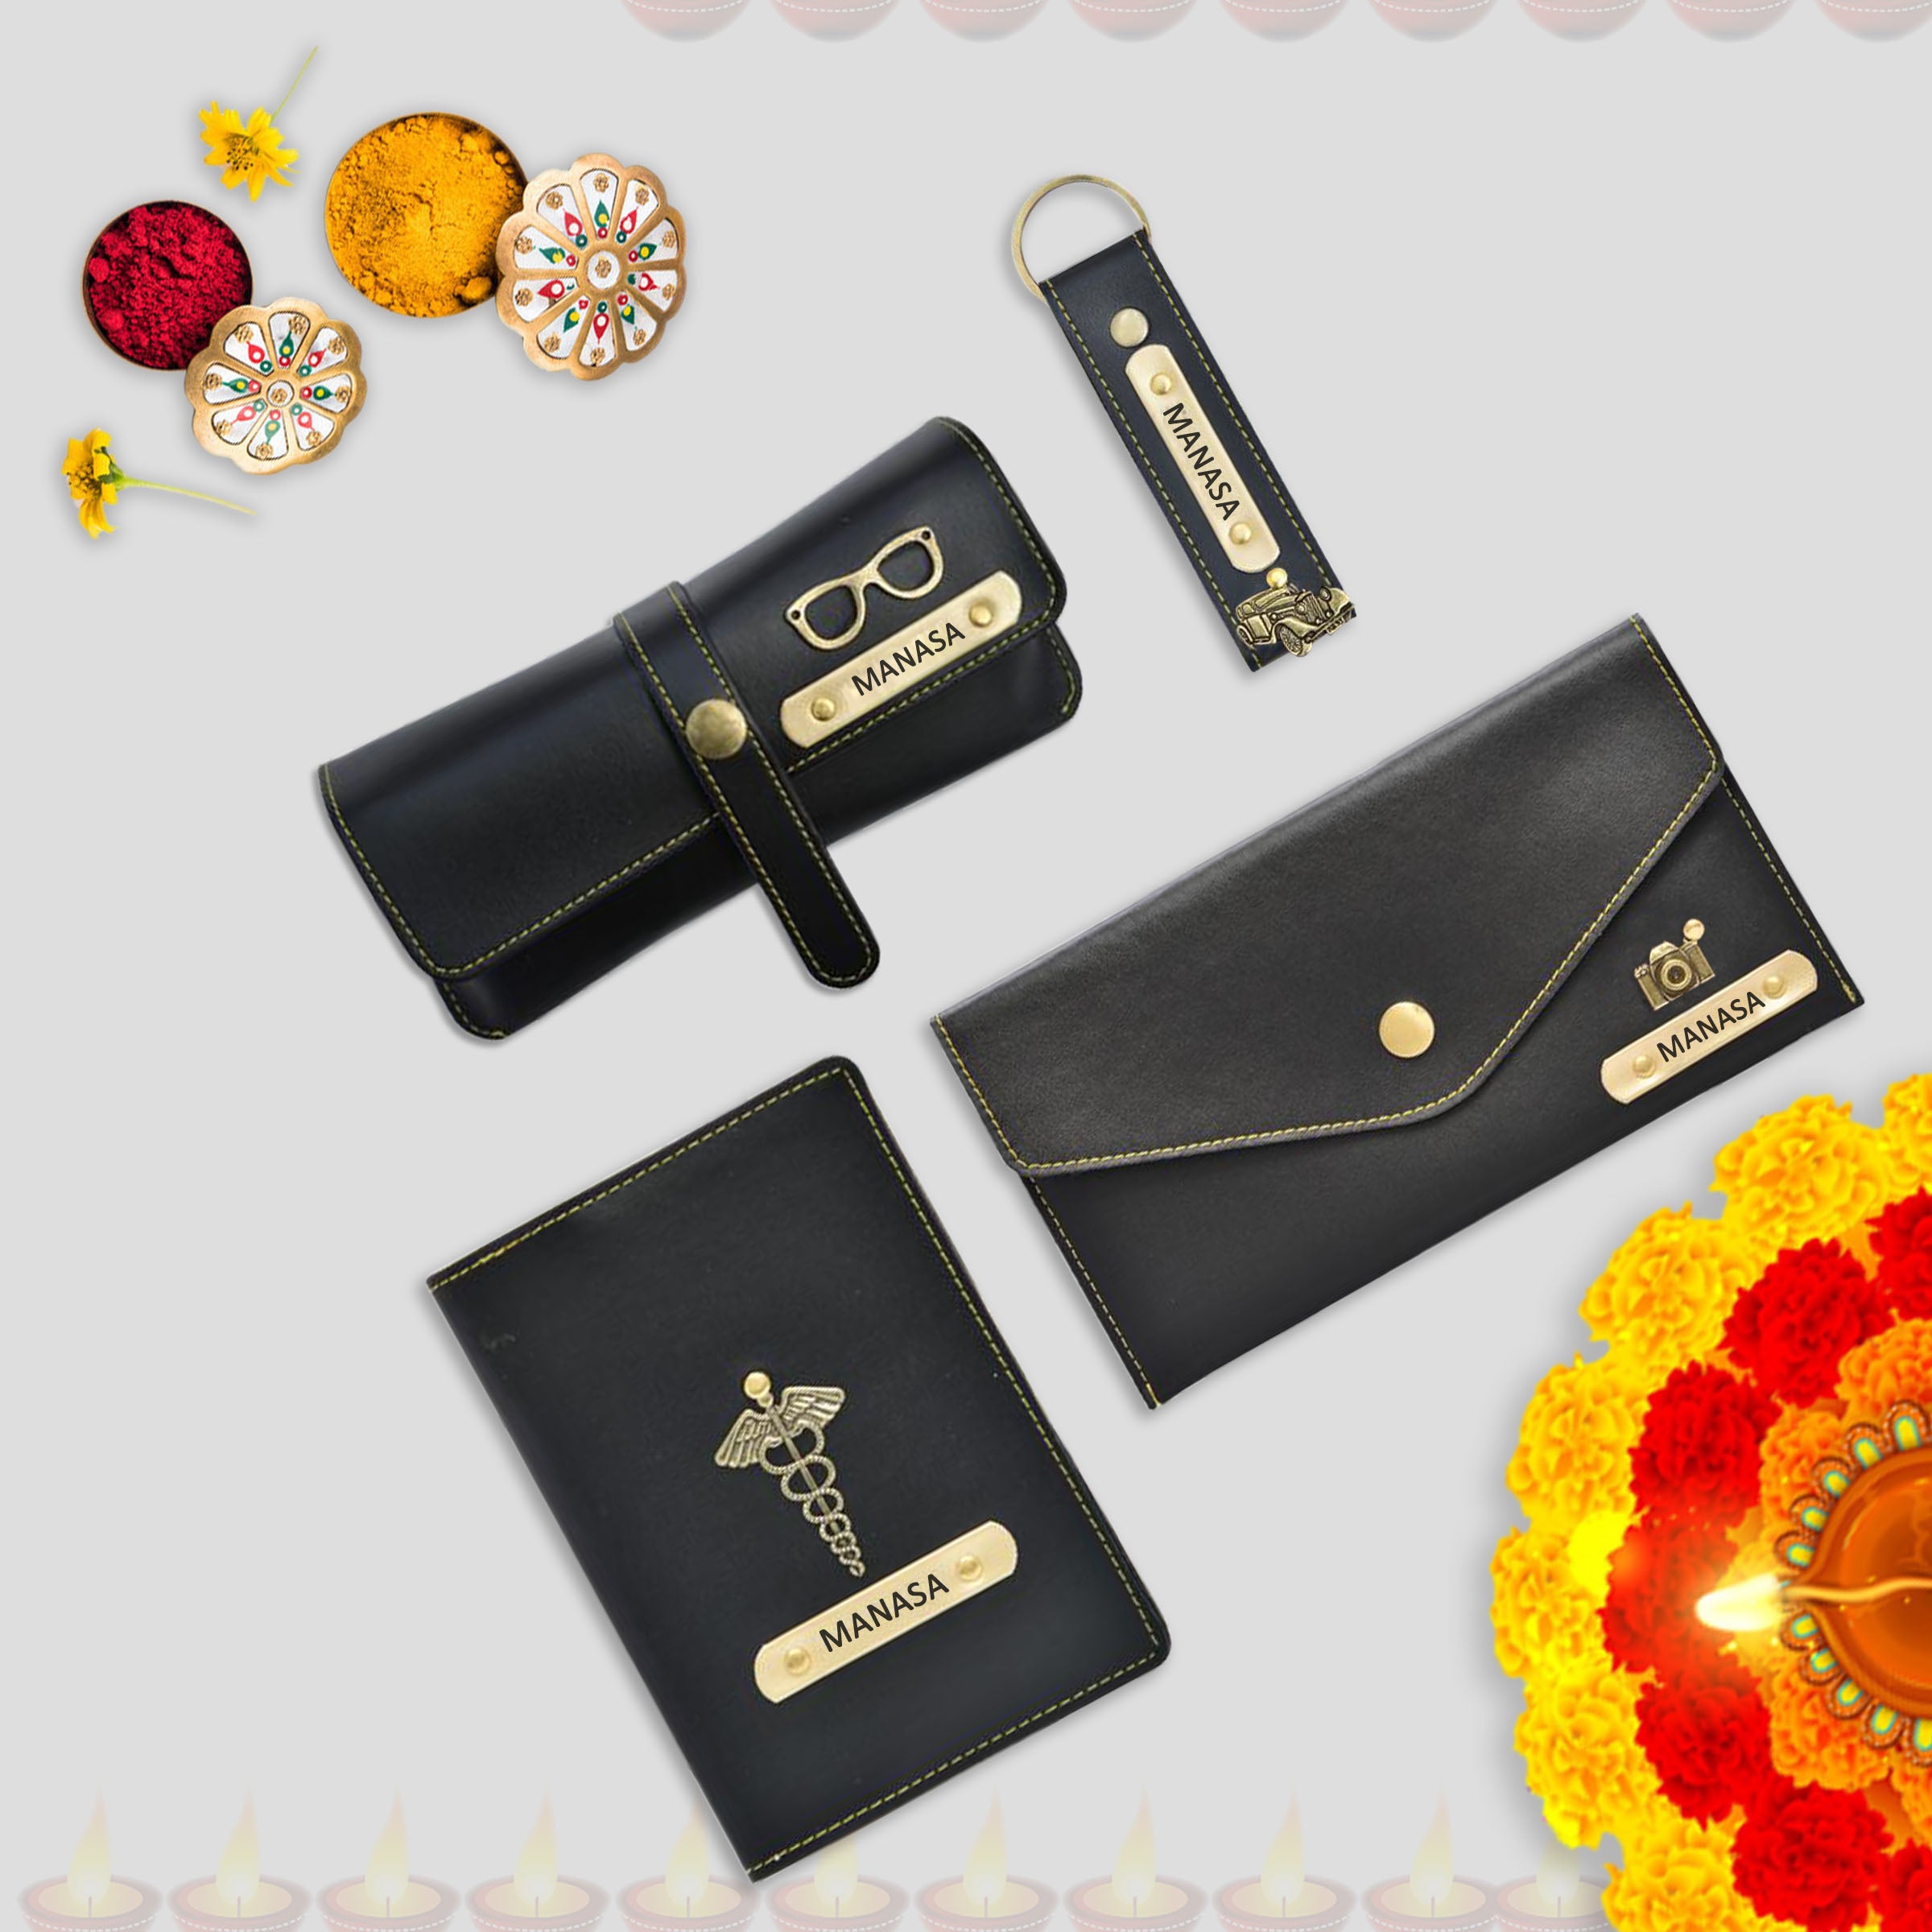 Buy/Send Diwali Gifts at best price - Dunkel braun